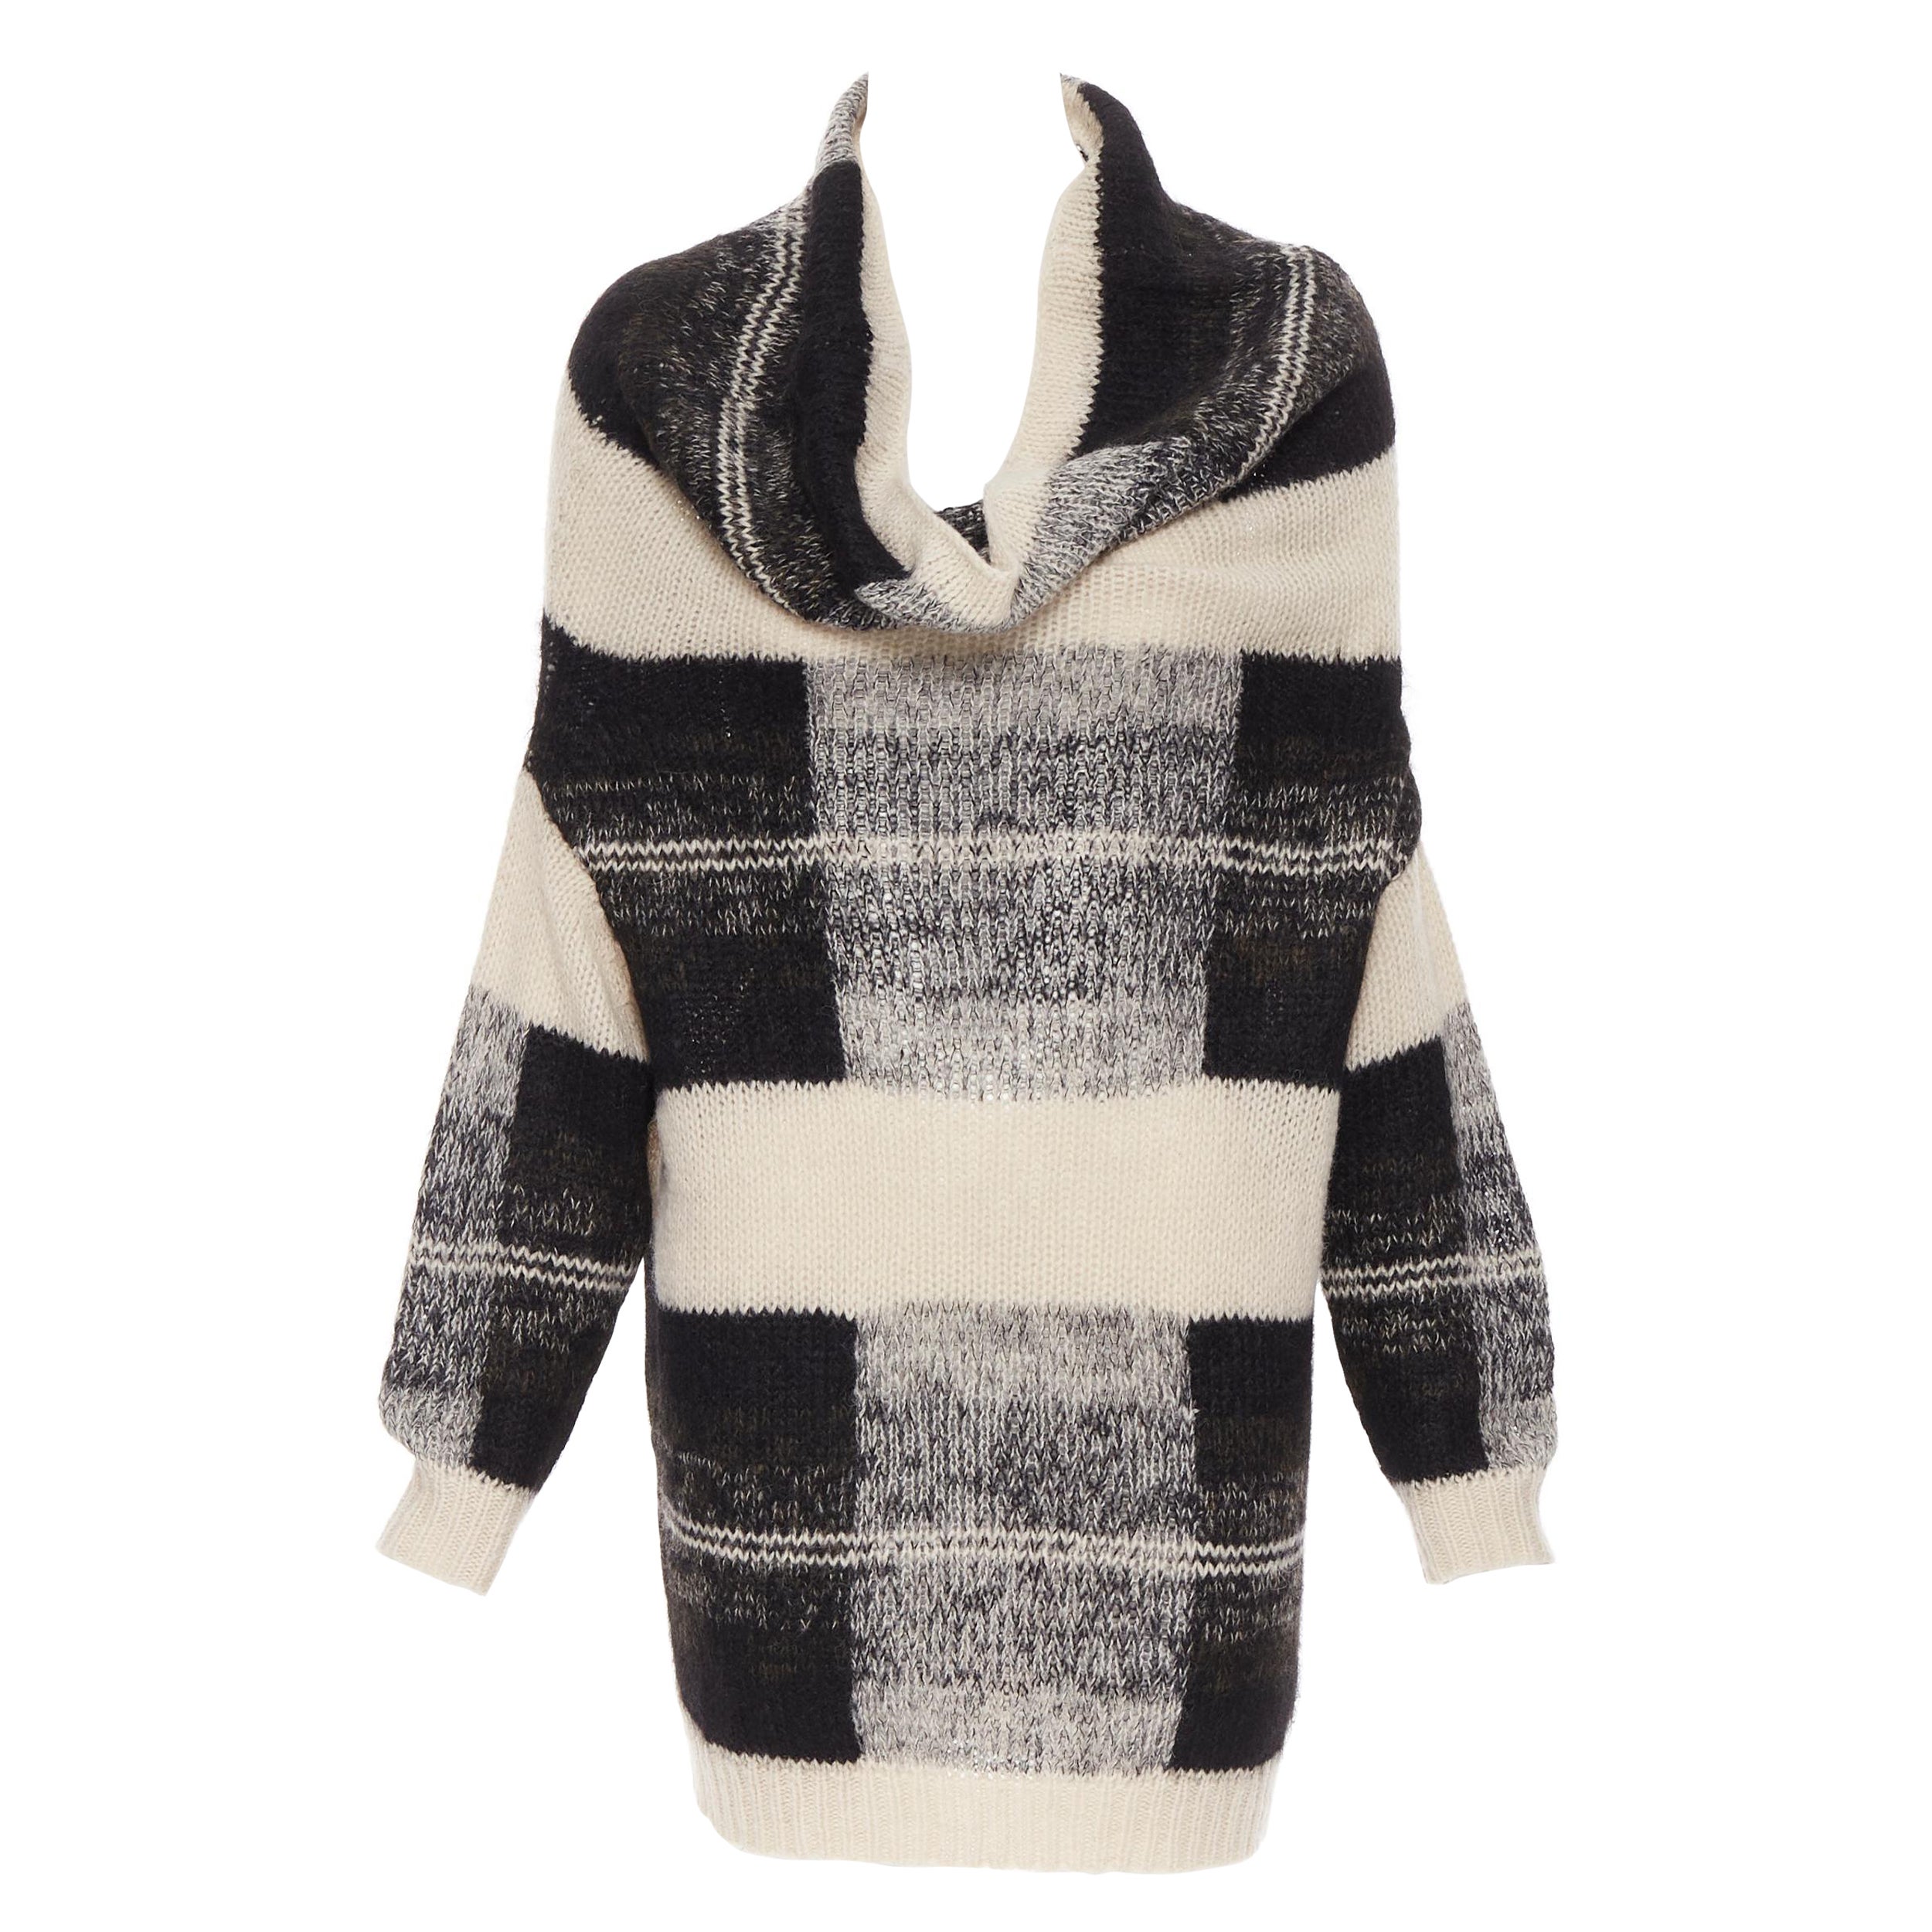 DRIES VAN NOTEN alpaca wool beige black check knit cowl neck sweater dress S